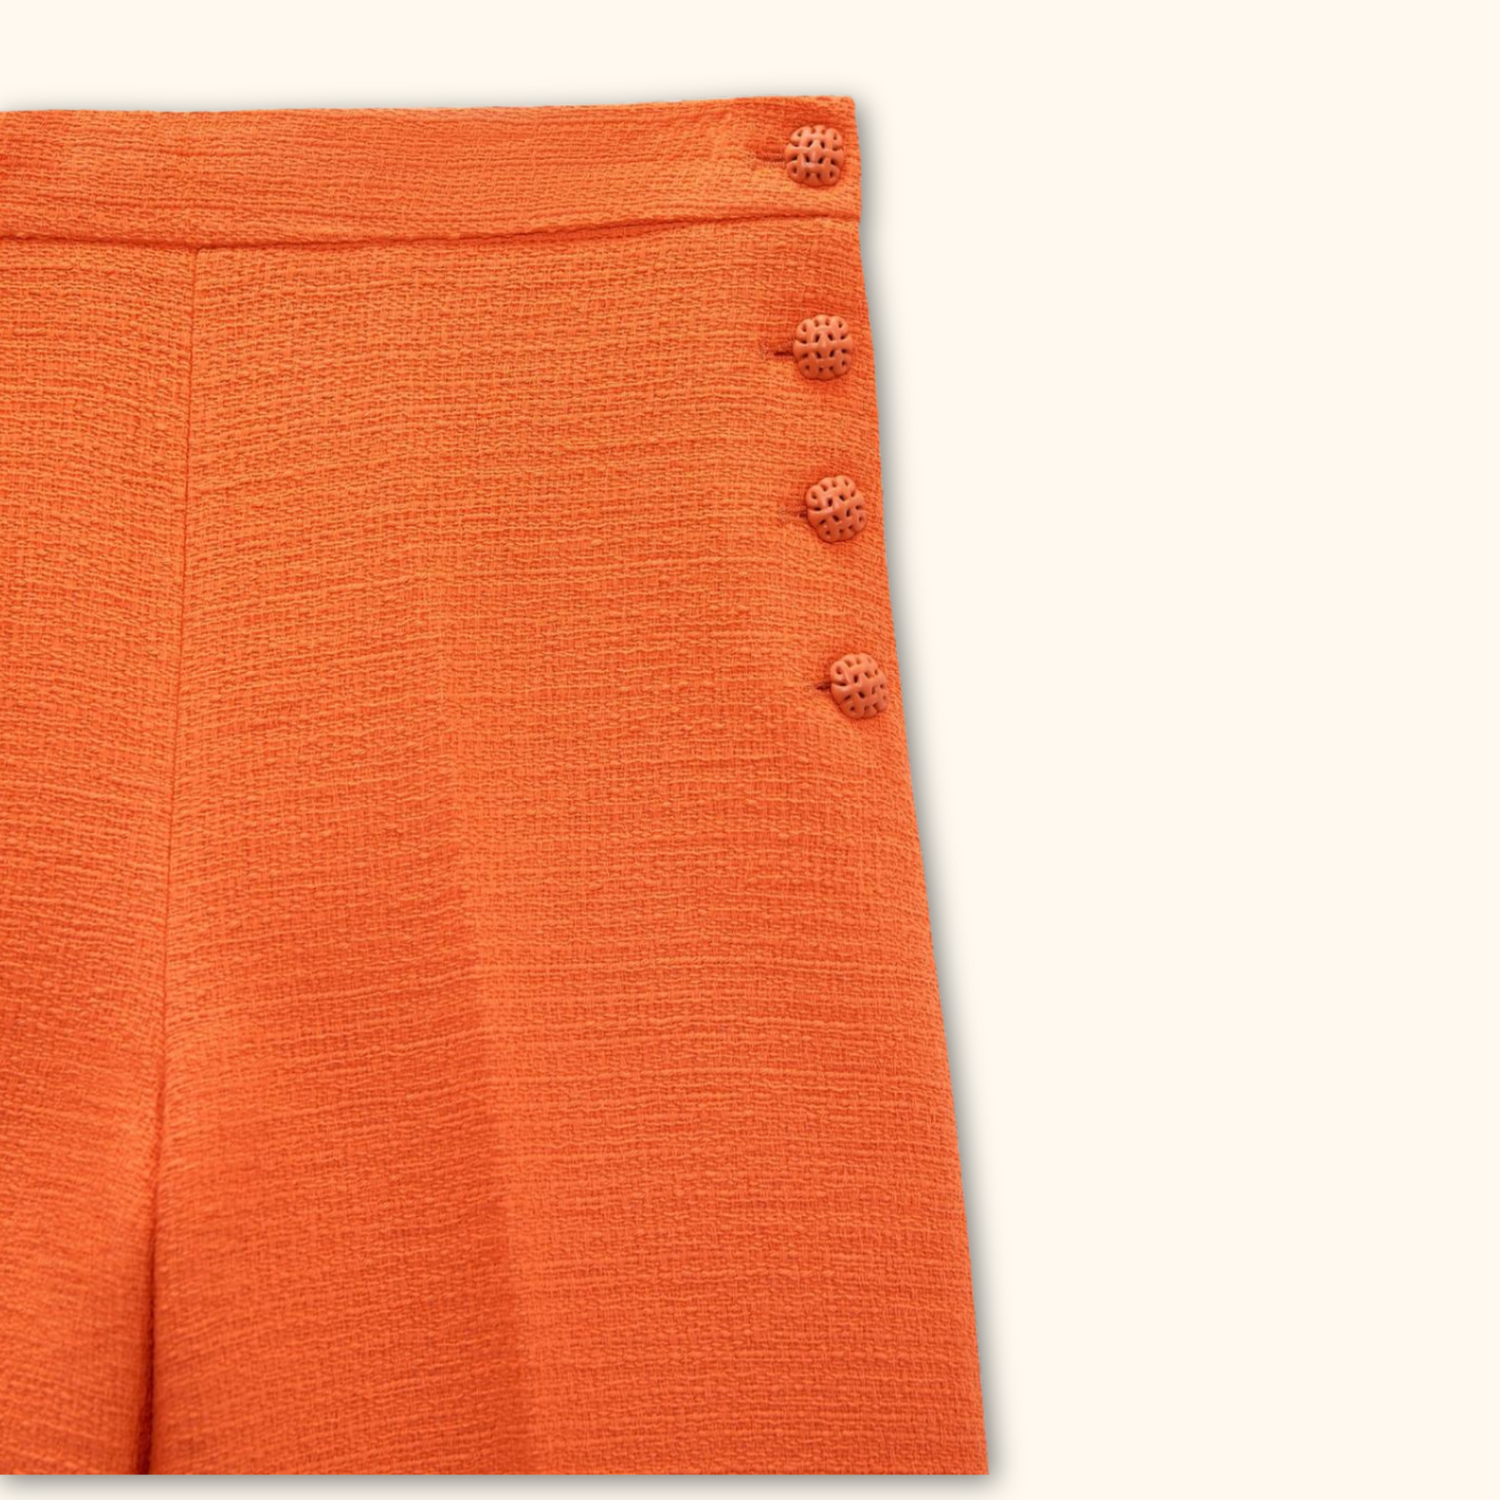 Zara Orange Culotte Wide Leg Trousers - Size Medium - Zara - Trousers